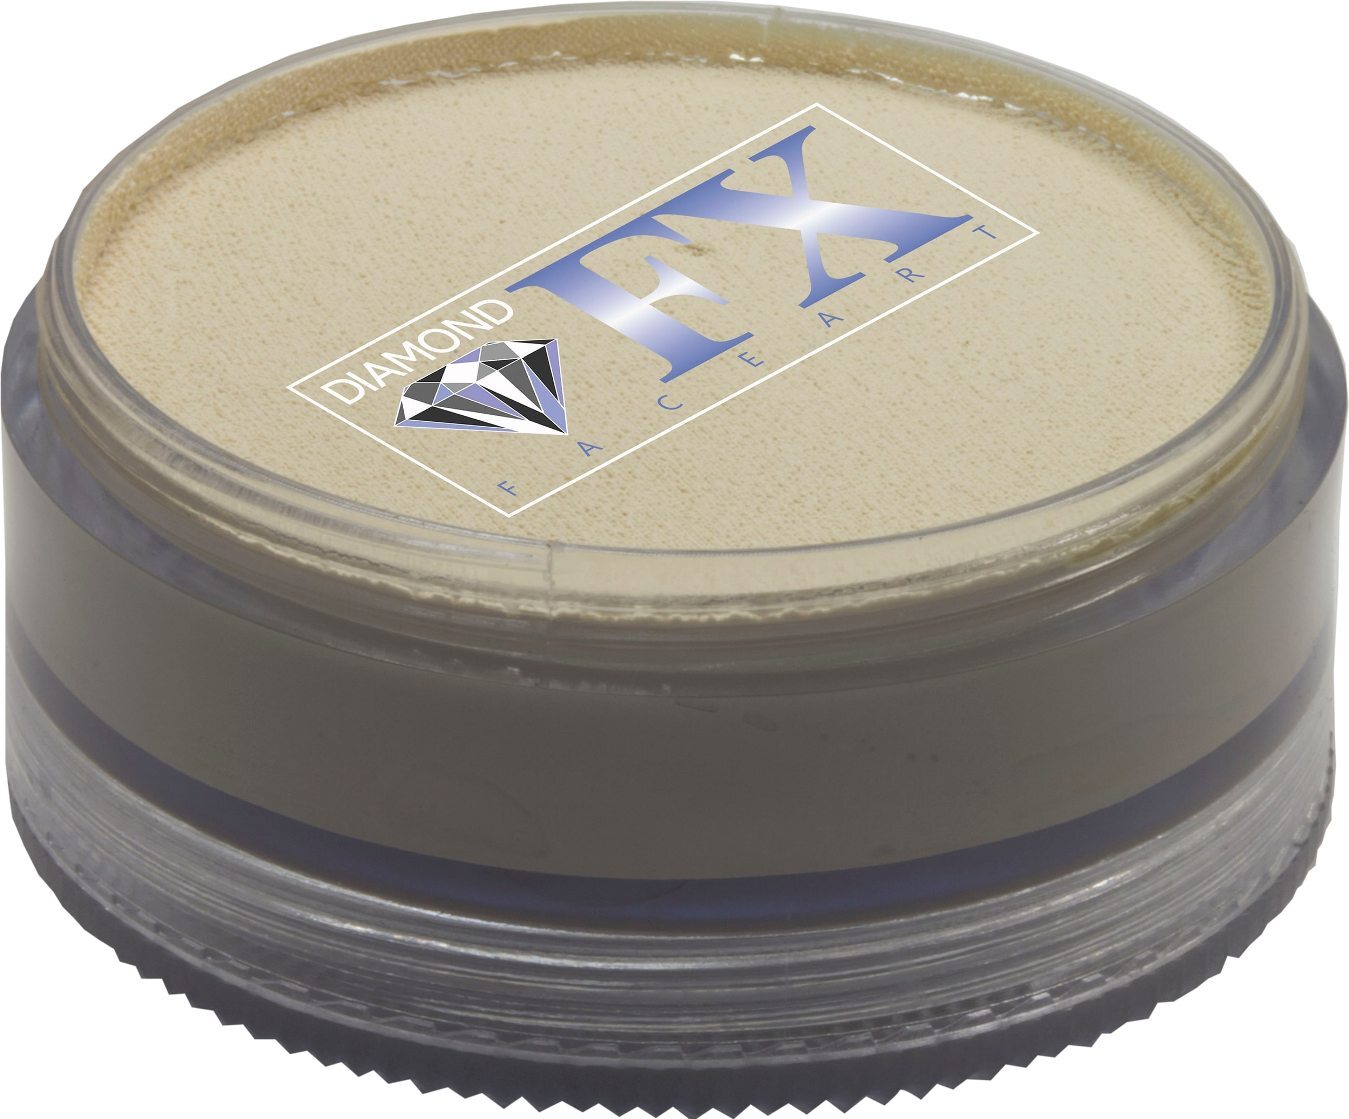 Diamond FX White Neon 90g (Cosmetic) - Small Image